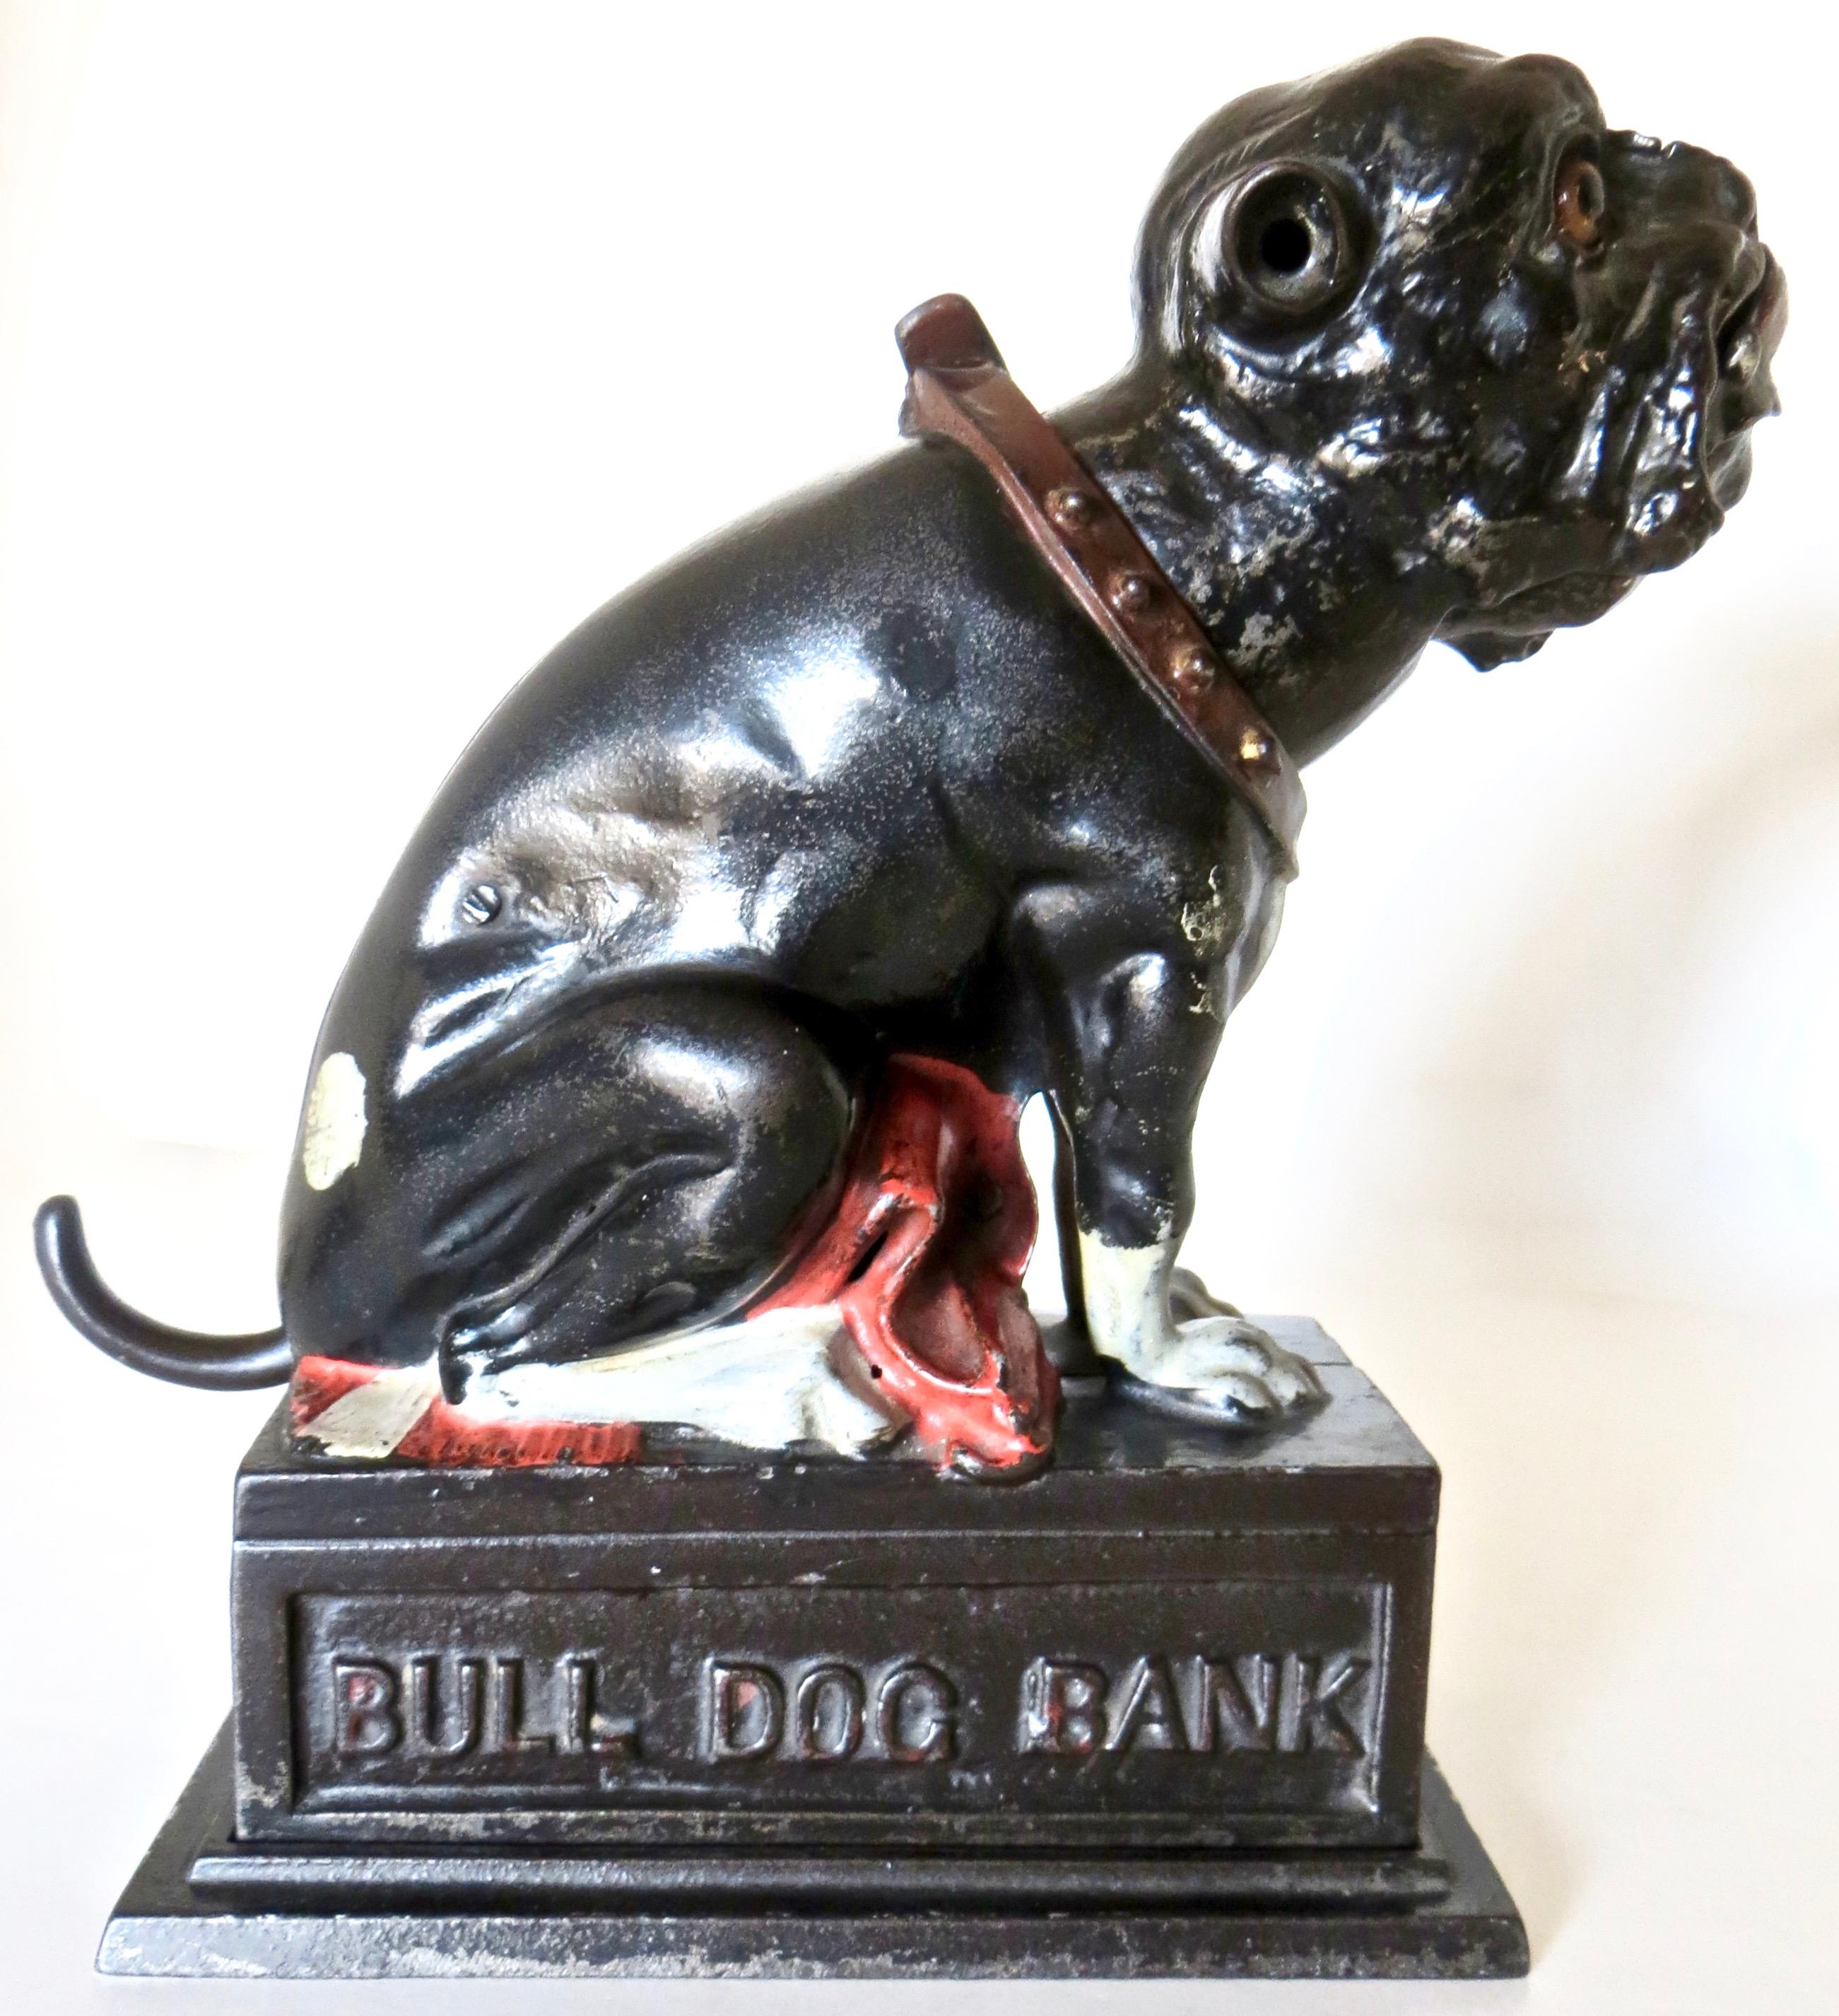 cast iron bulldog bank